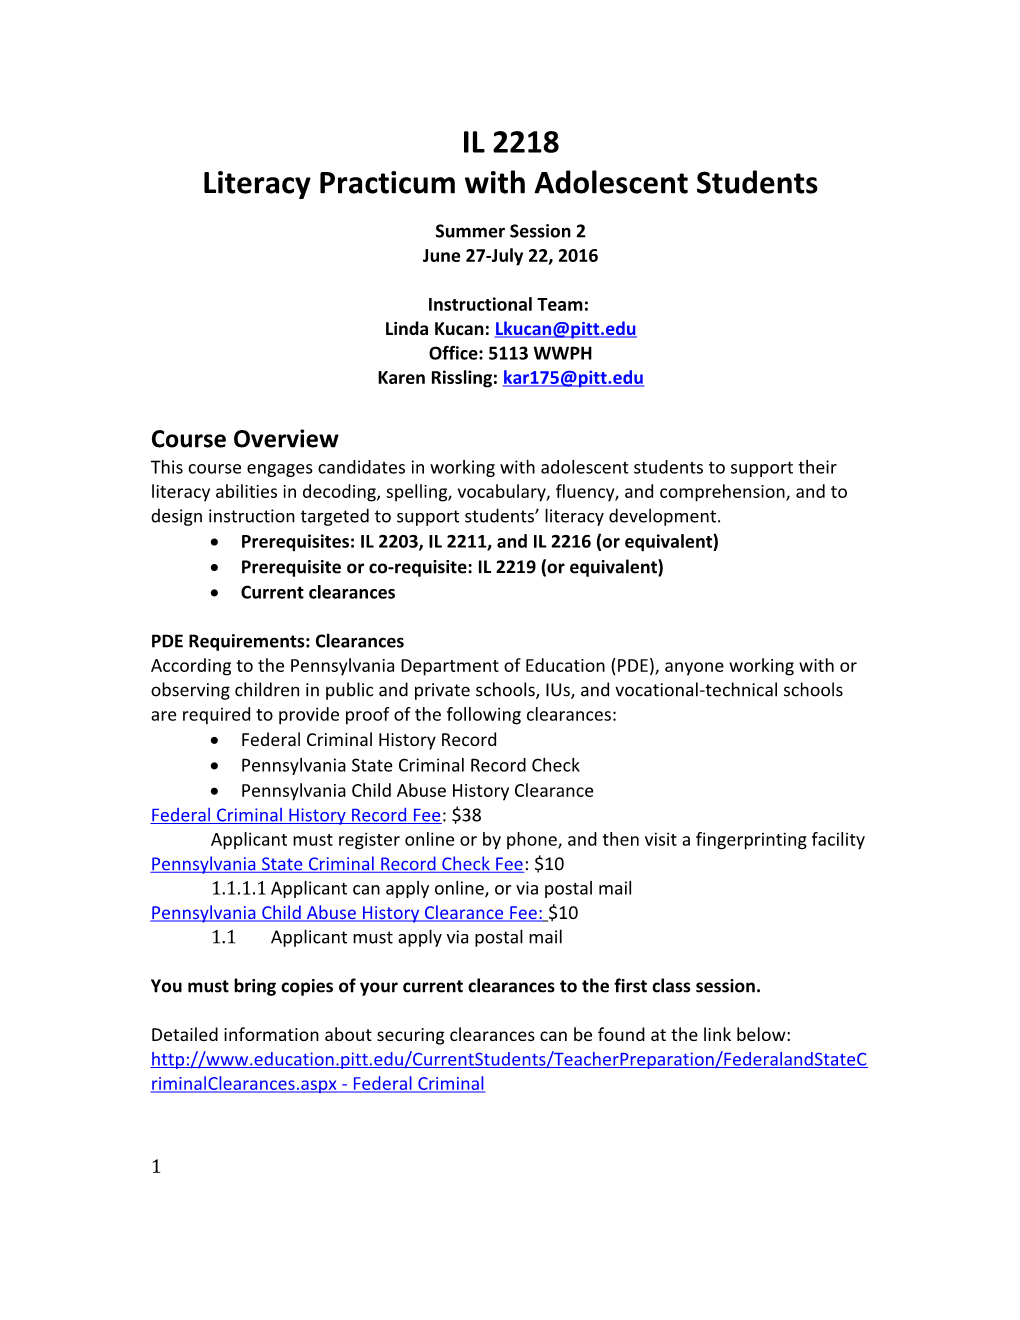 Literacy Practicum with Adolescent Students